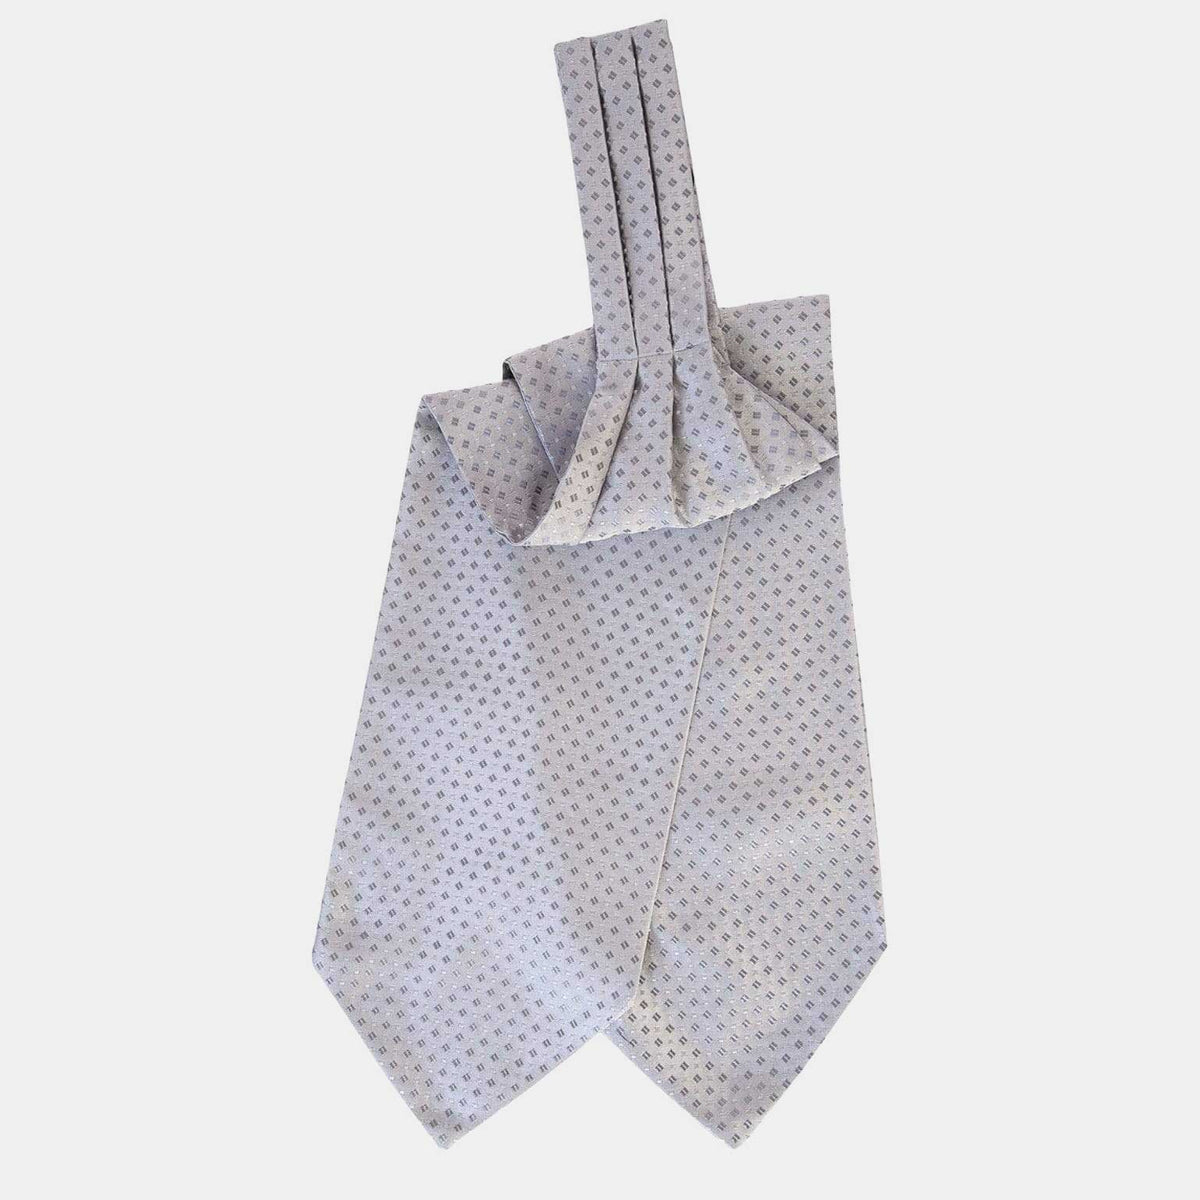 Silver Ascot Tie - Handmade in Italy - Woven Design